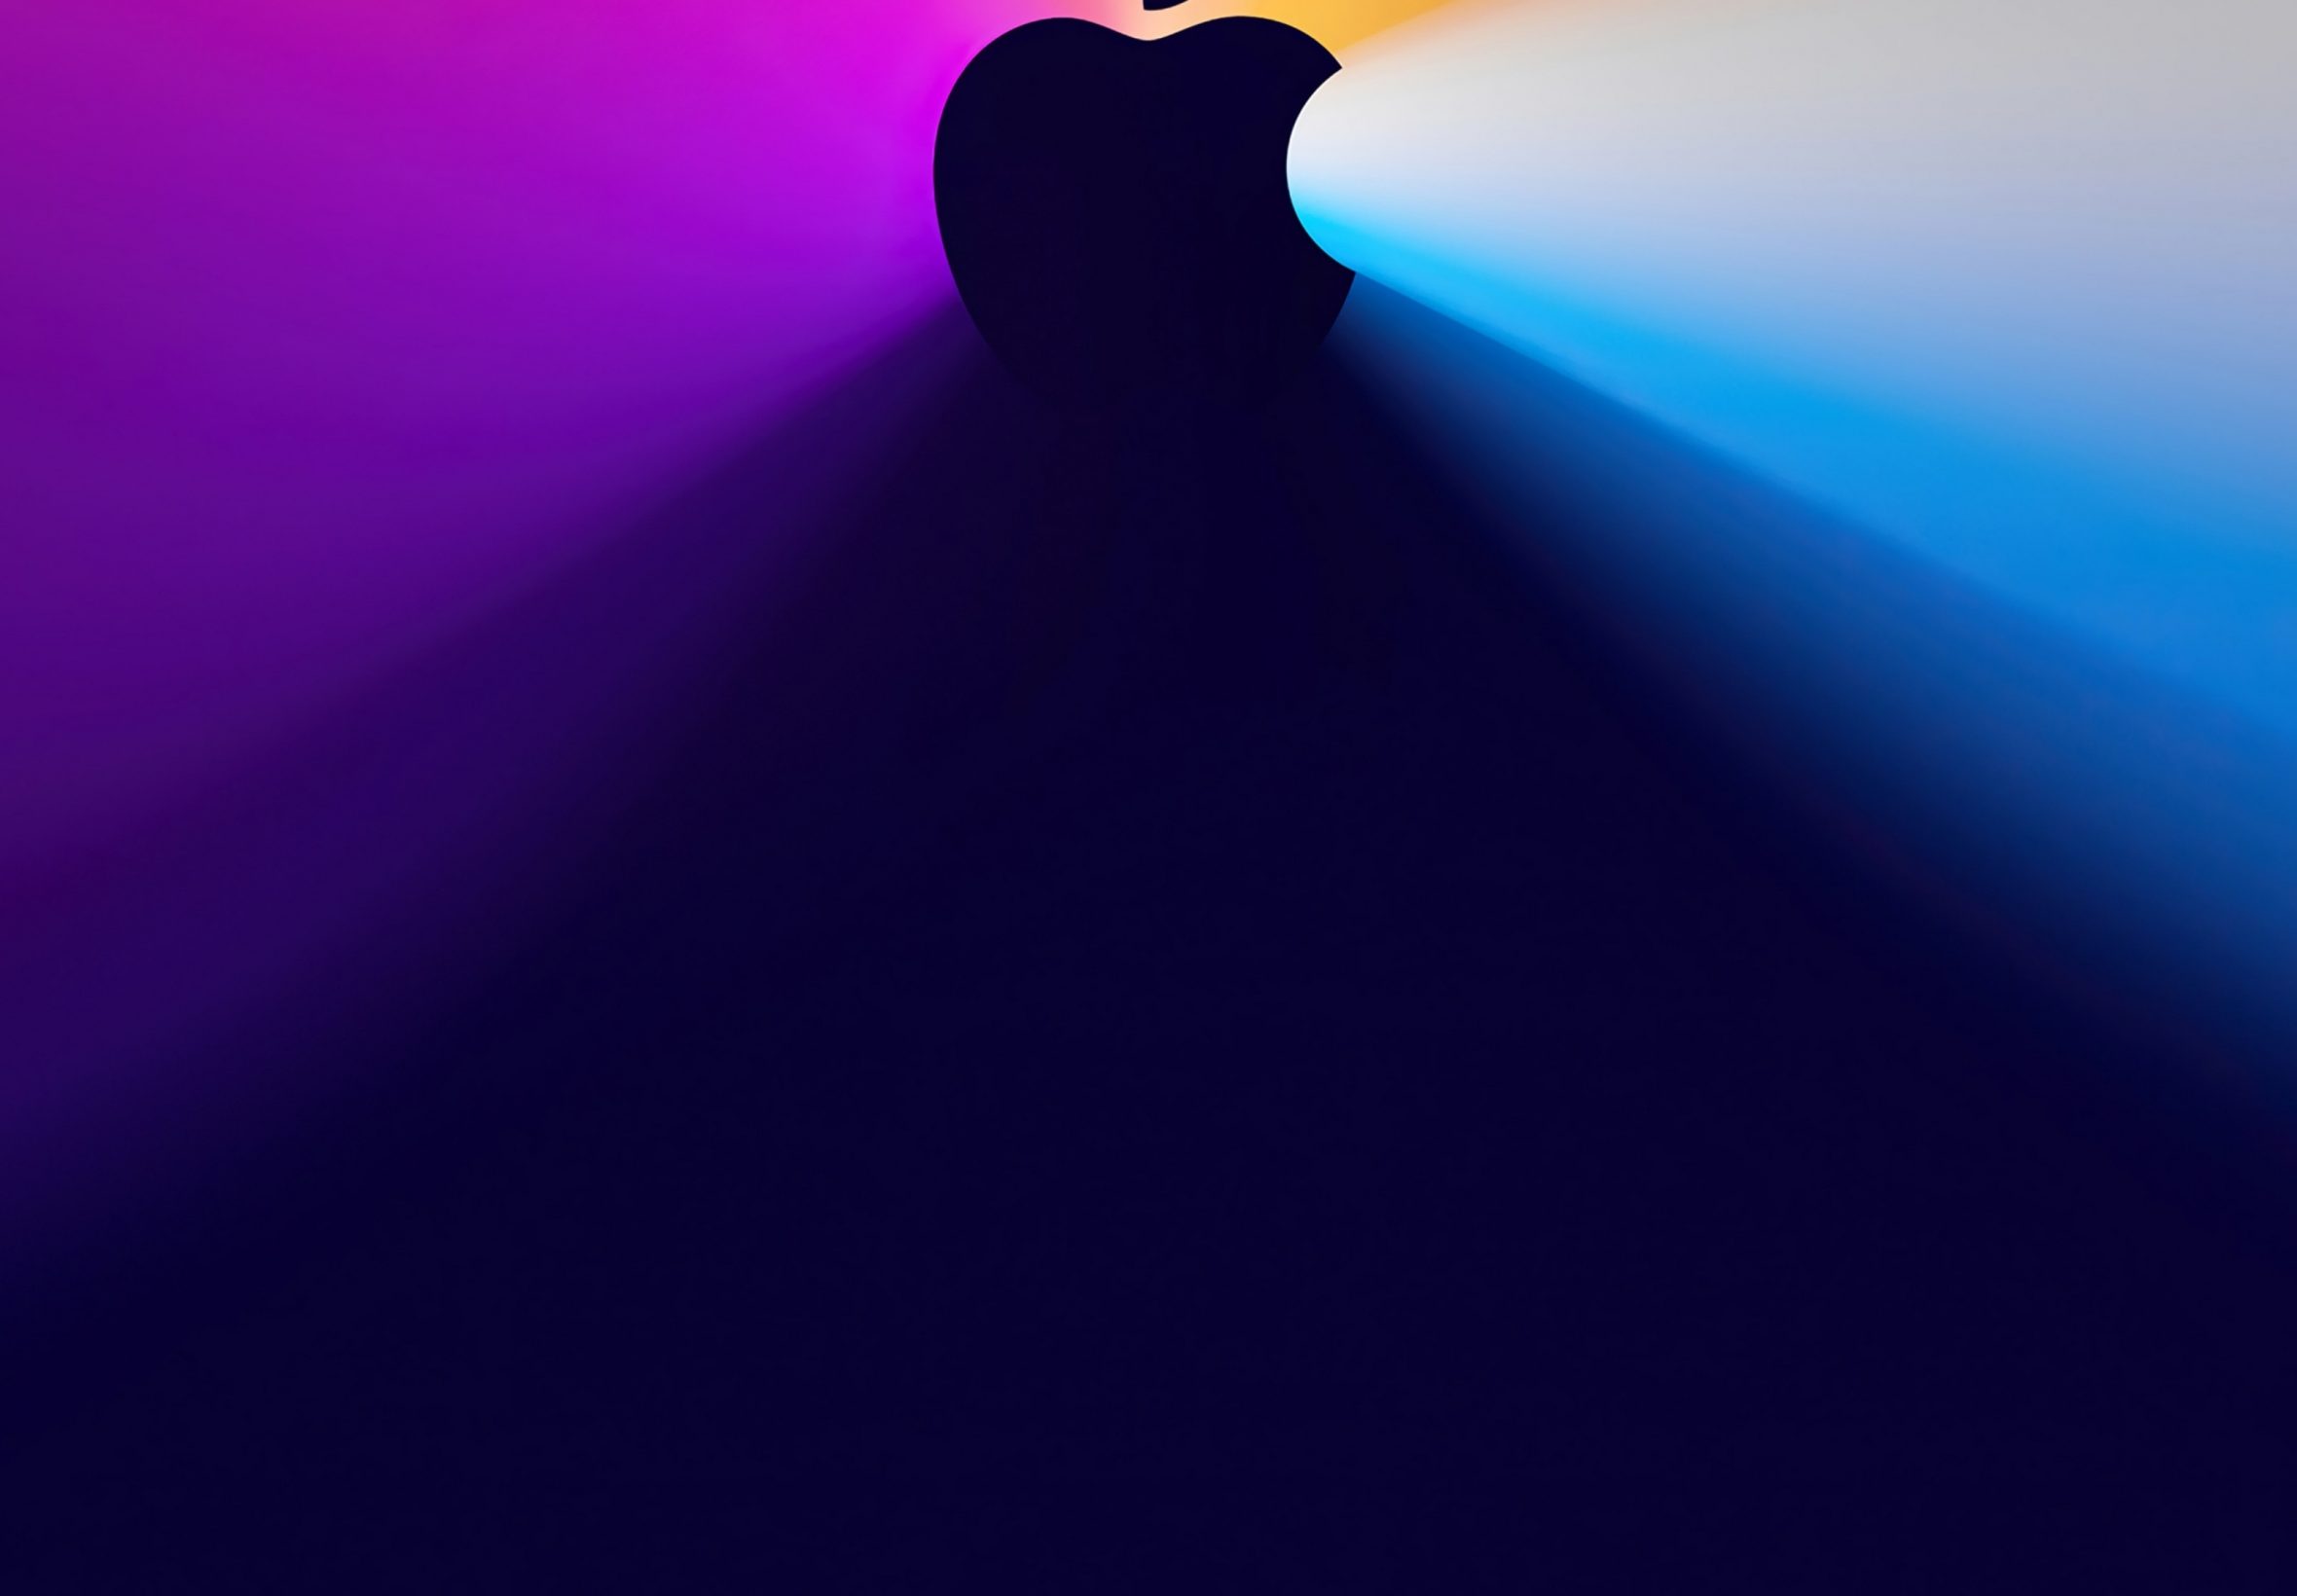 2360x1640 iPad Air wallpaper 4k Colourful iPhone 12 Apple Logo iPad Wallpaper 2360x1640 pixels resolution